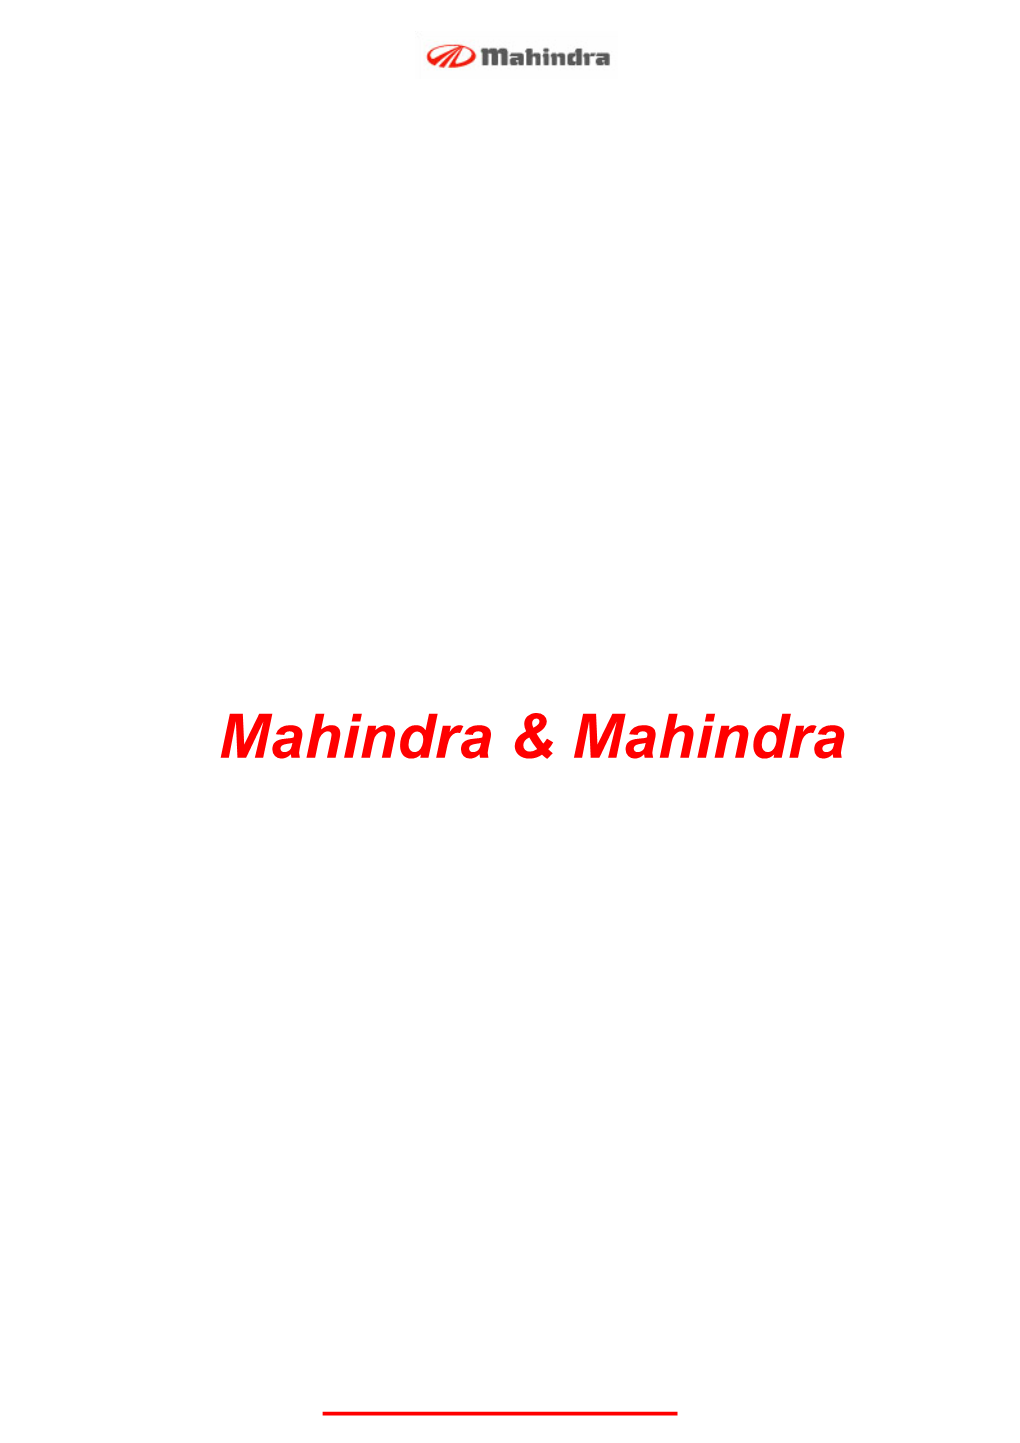 Mahindra in Europe